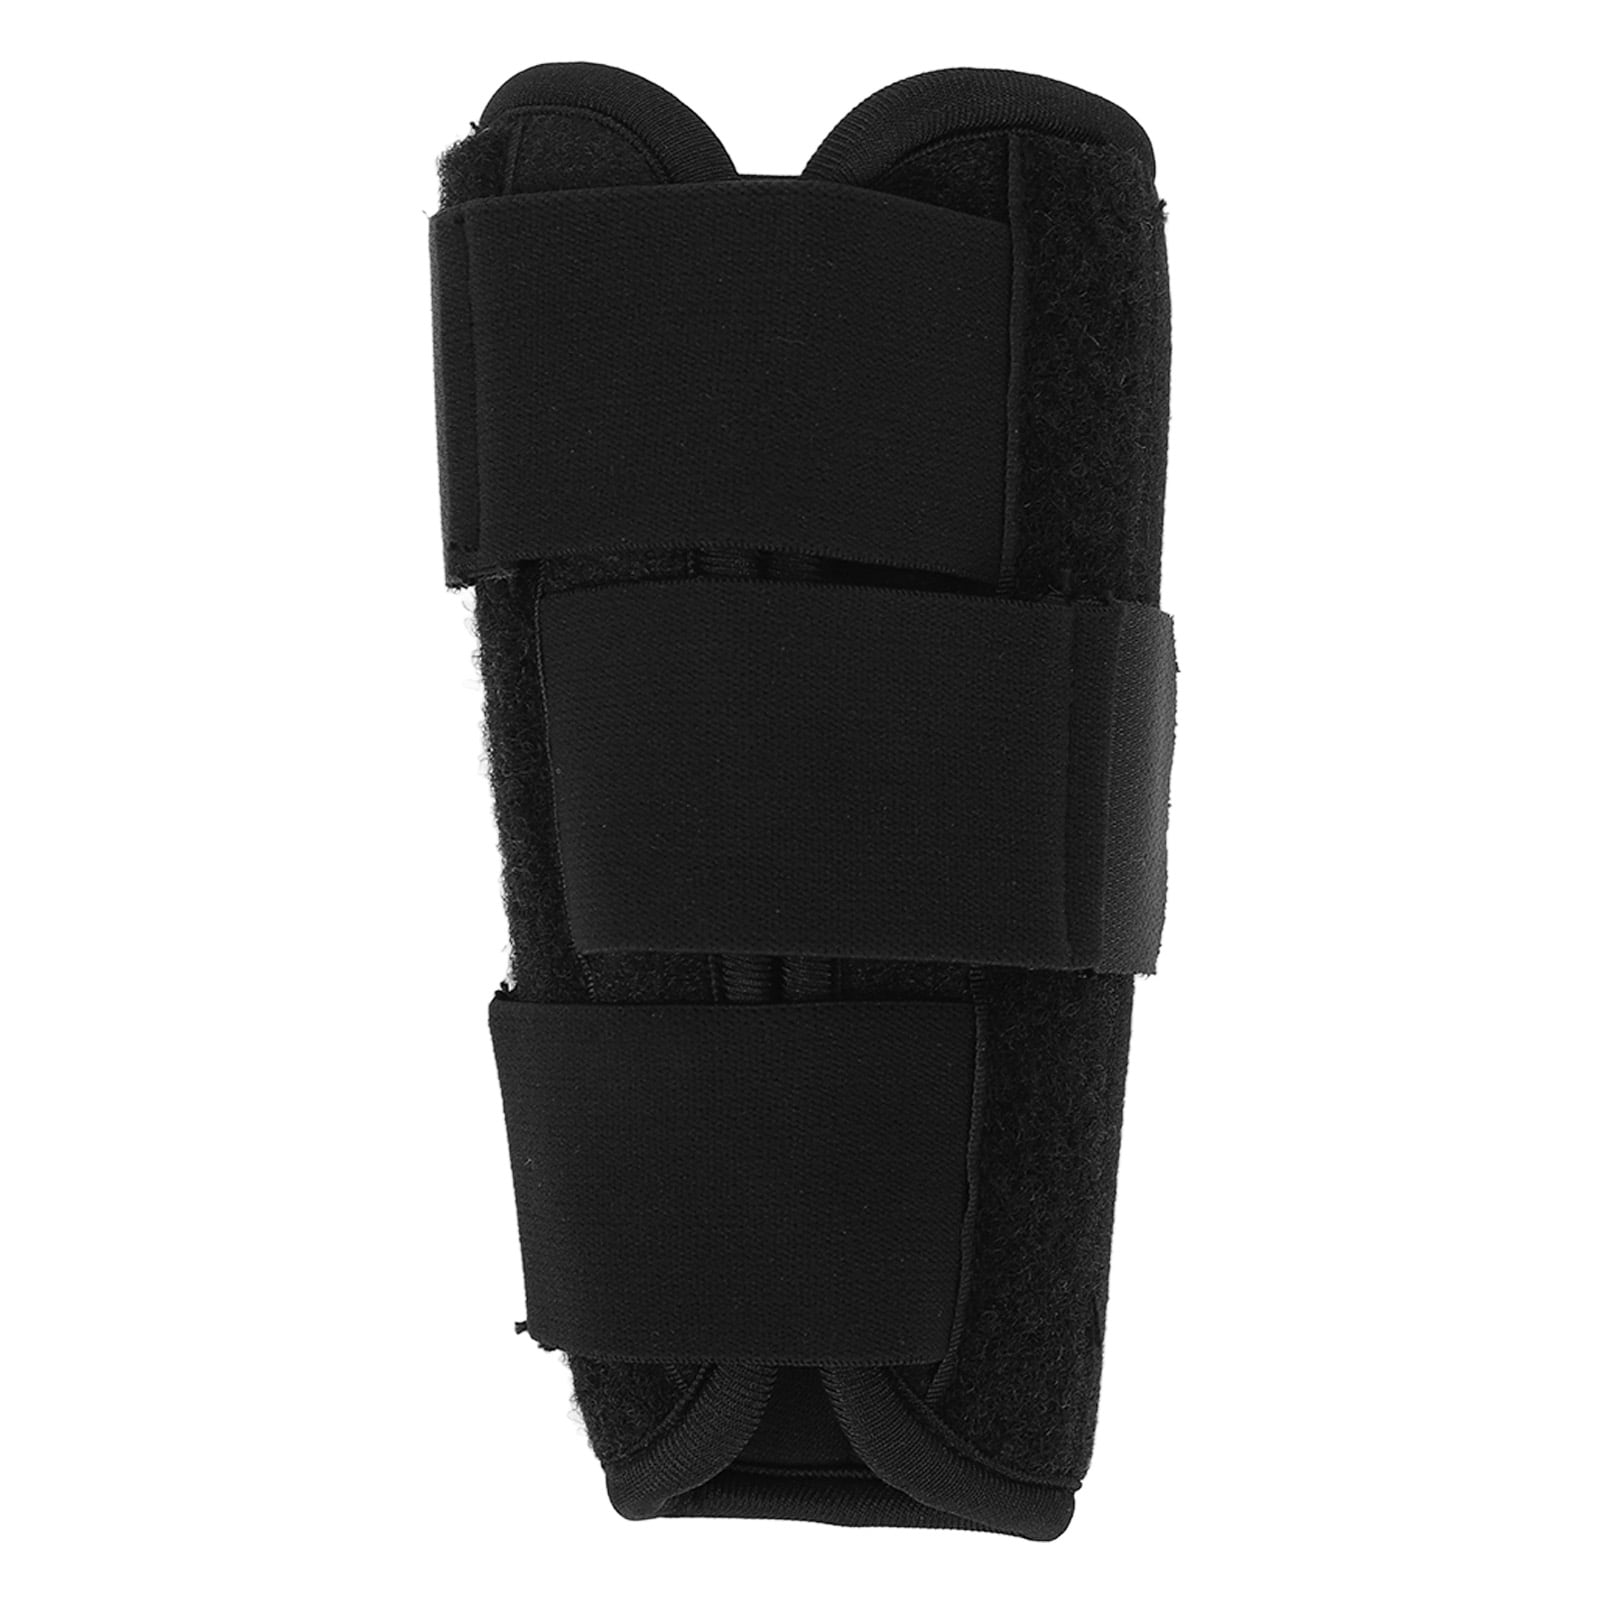 Forearm Support Splint Brace, Removable Splint Flexible Protective ...